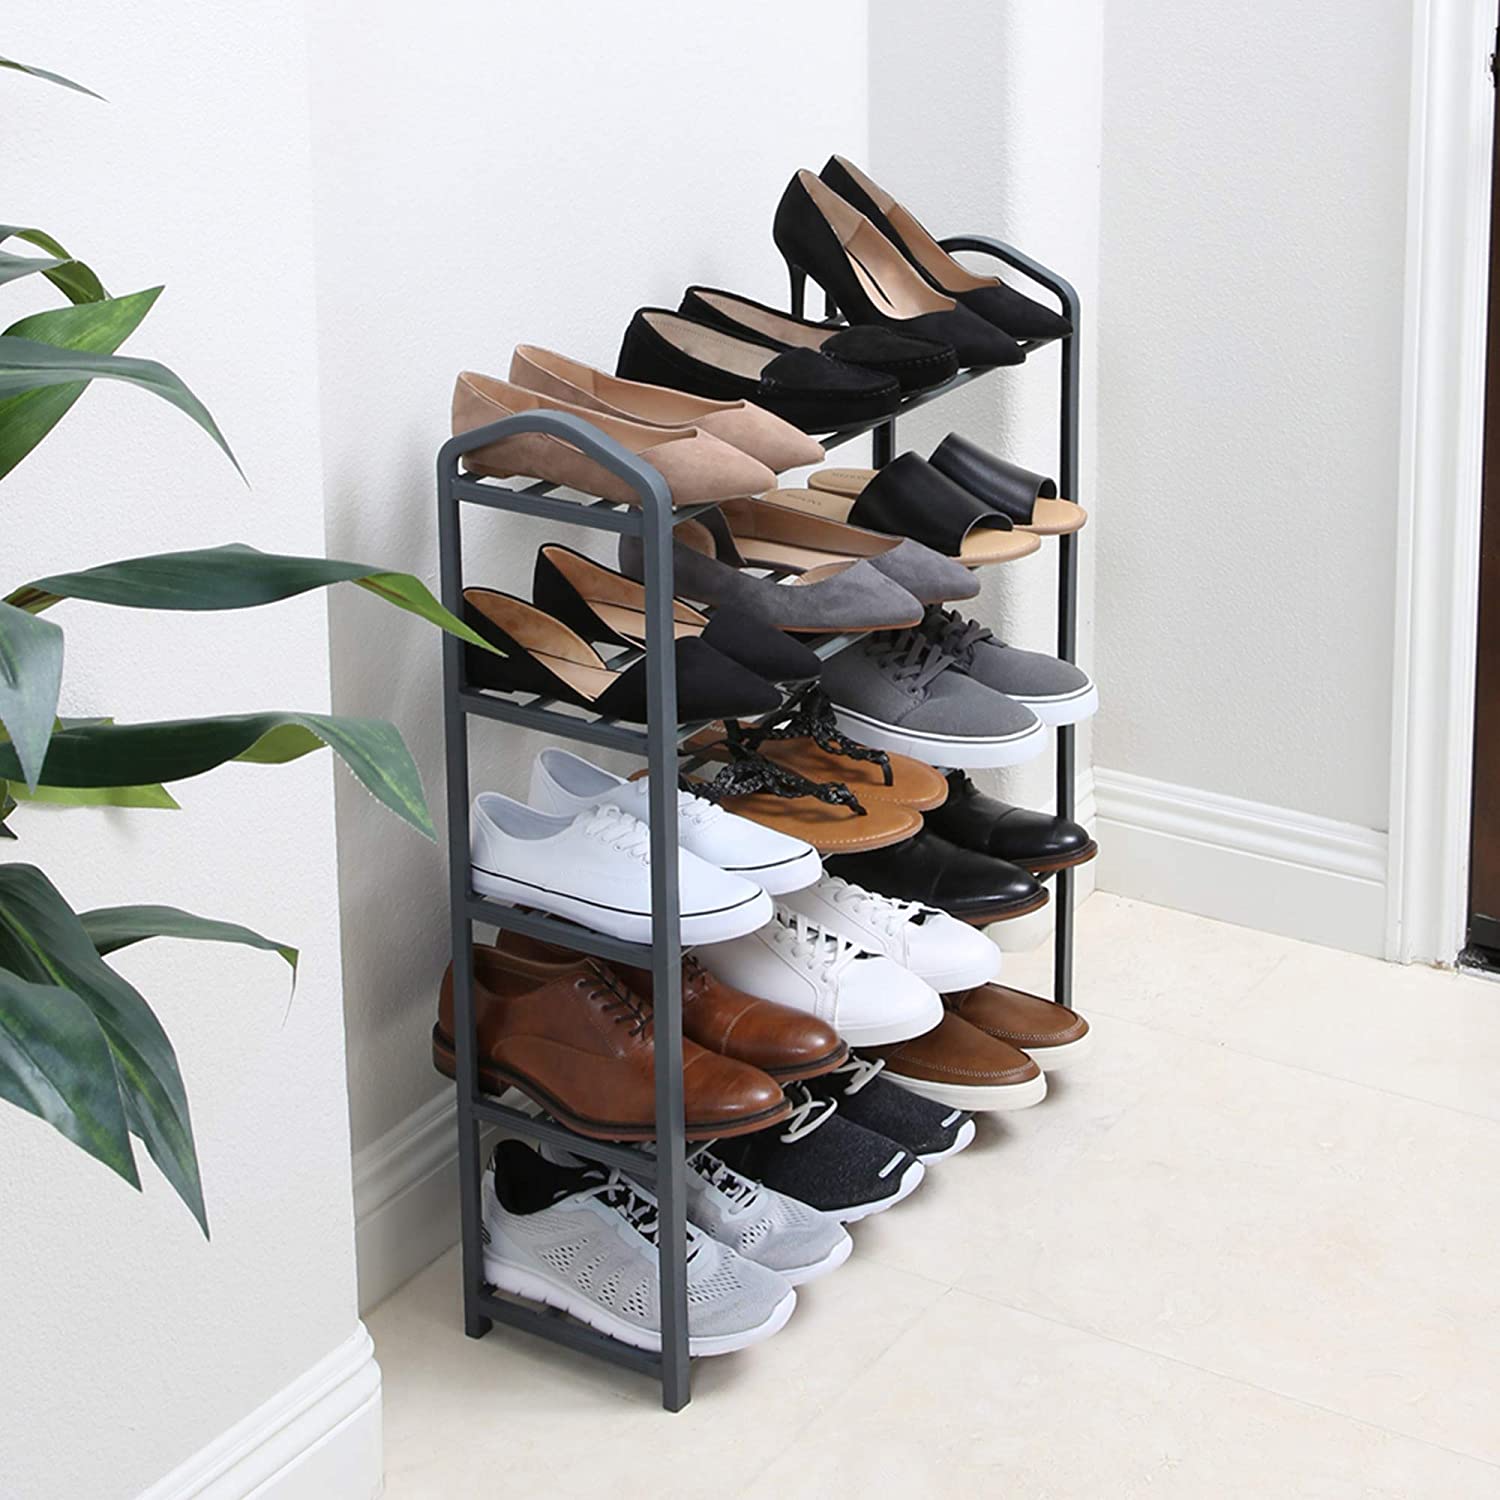 5-Tier Shoe Storage Organizer with 4 Metal Mesh Shelves